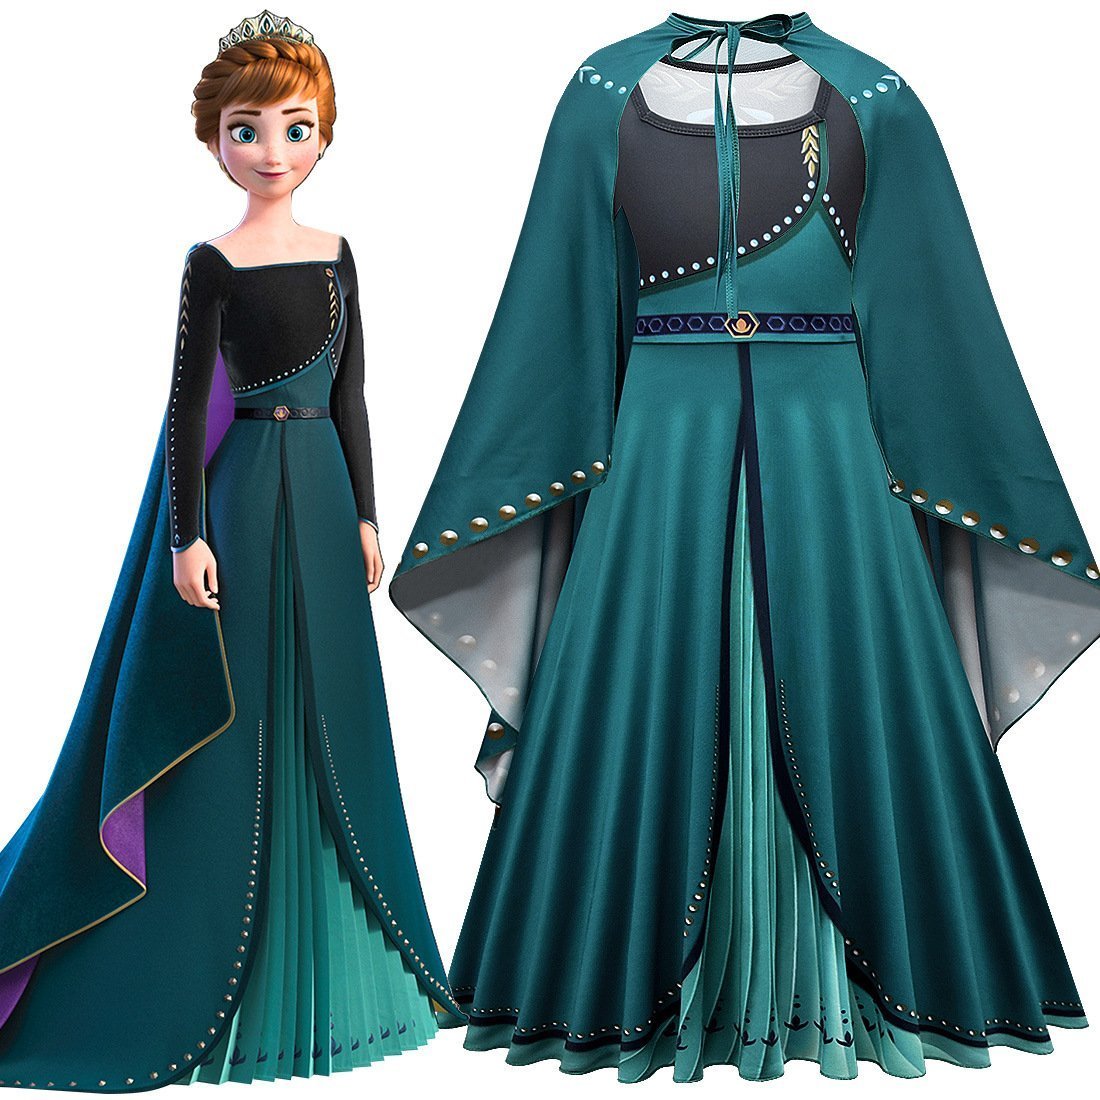 Frozen Girl Dresses Baby Kid Princess Anna Dress Snow Queen Cosplay Costume Party Dress